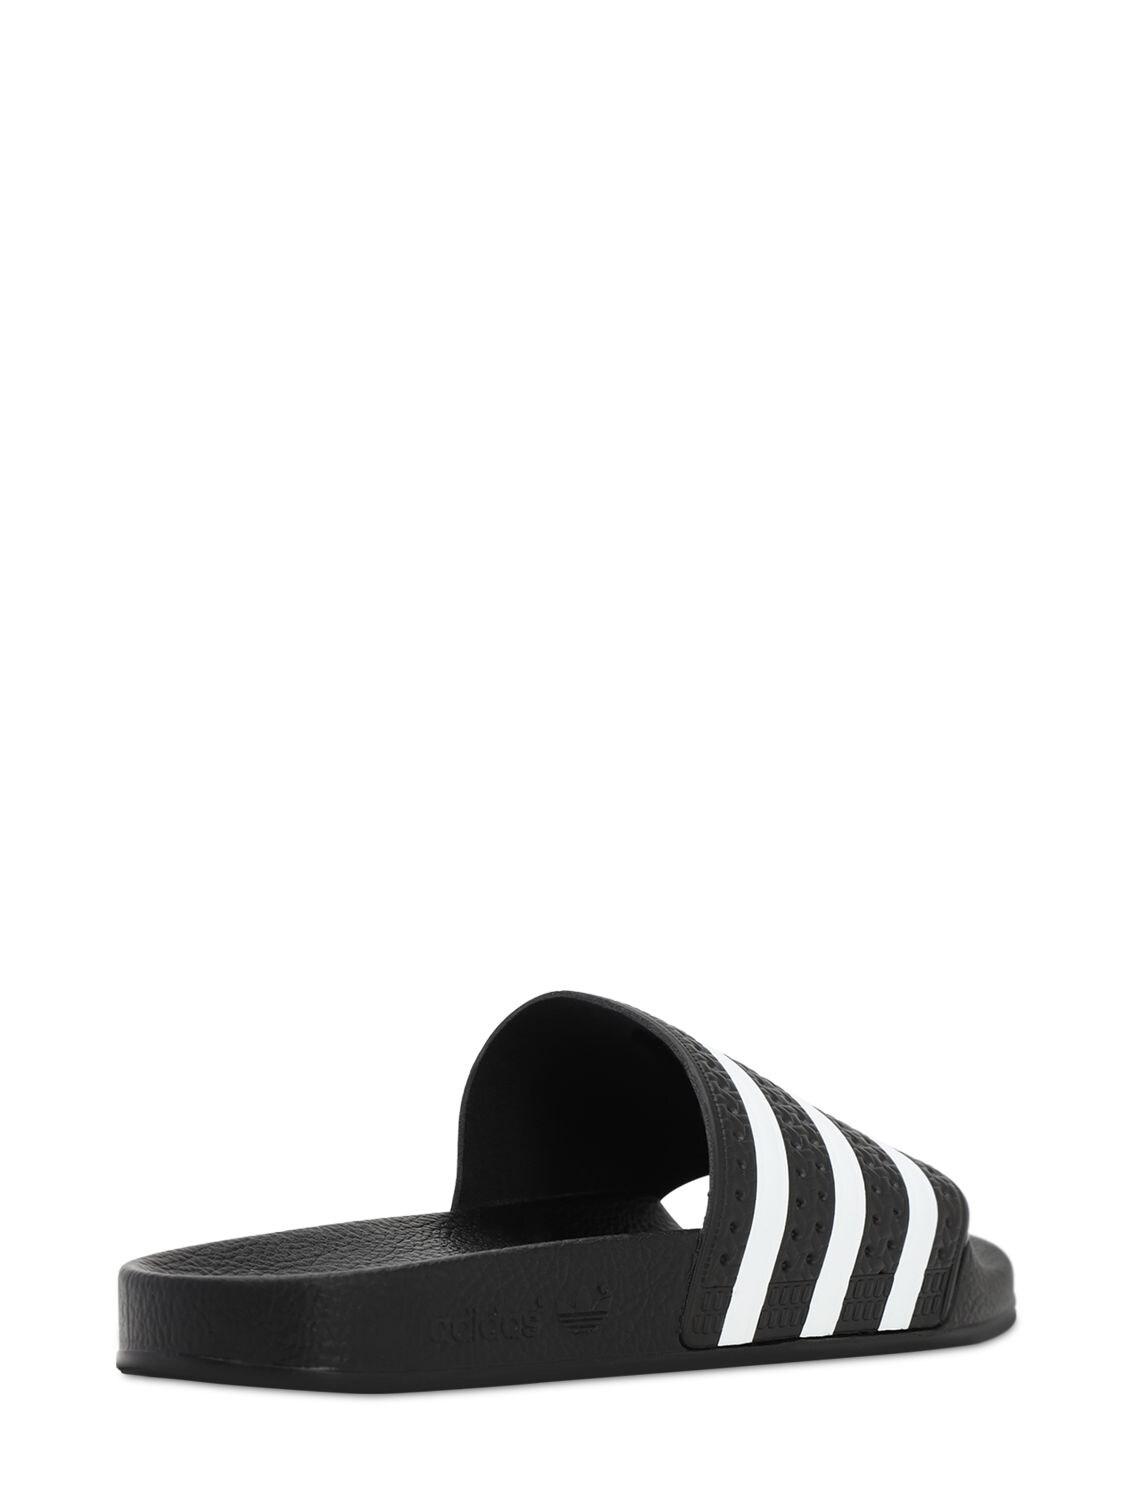 adidas Originals Rubber Adilette Slide Sandals in Black/White (Black) for  Men - Lyst